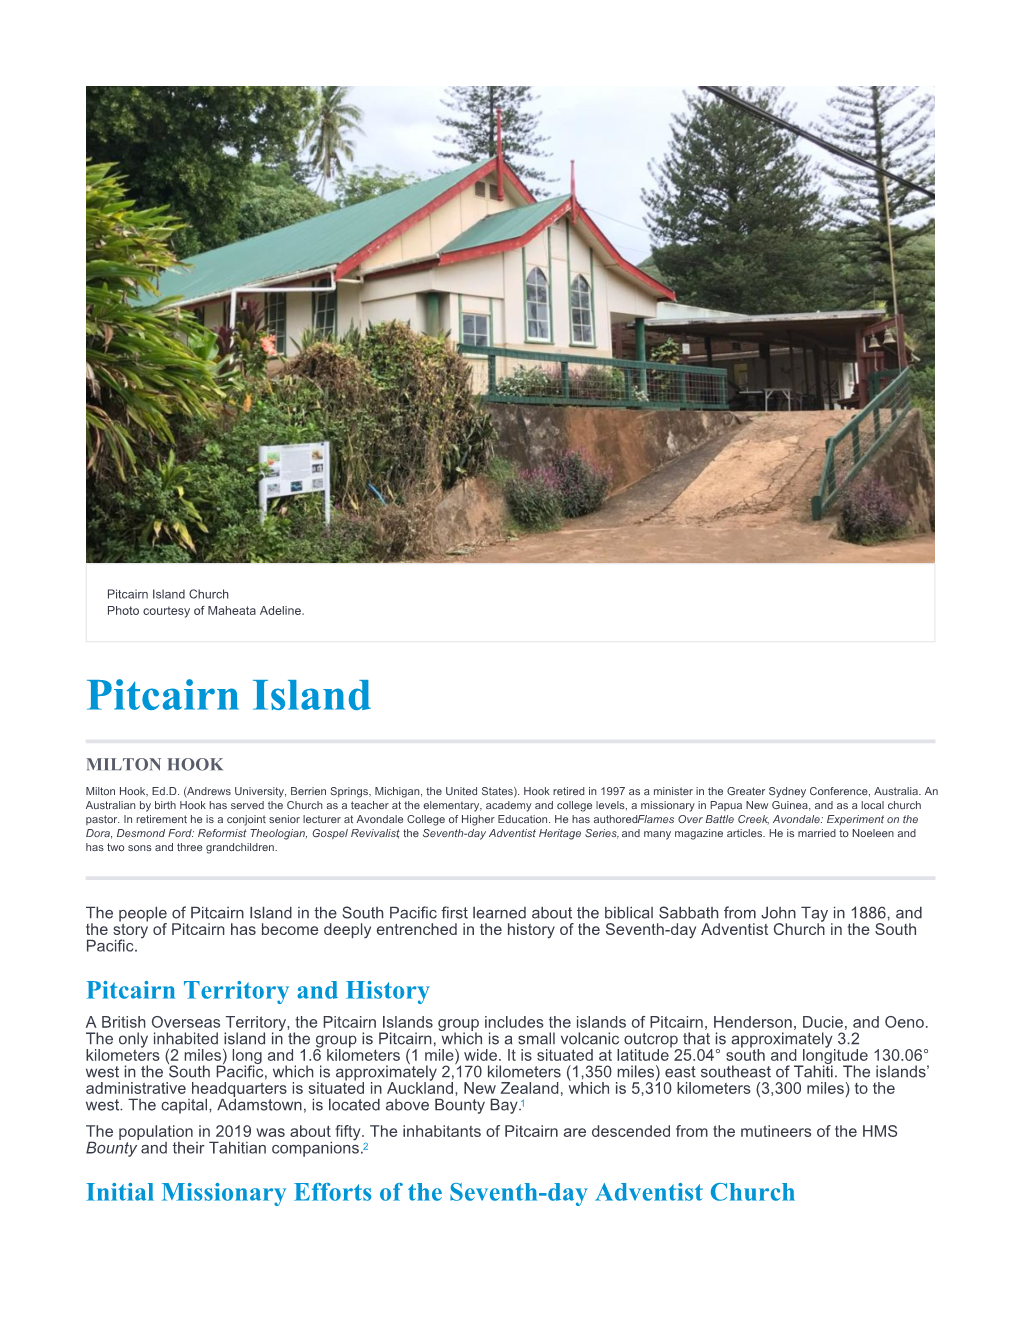 Pitcairn Island Church Photo Courtesy of Maheata Adeline